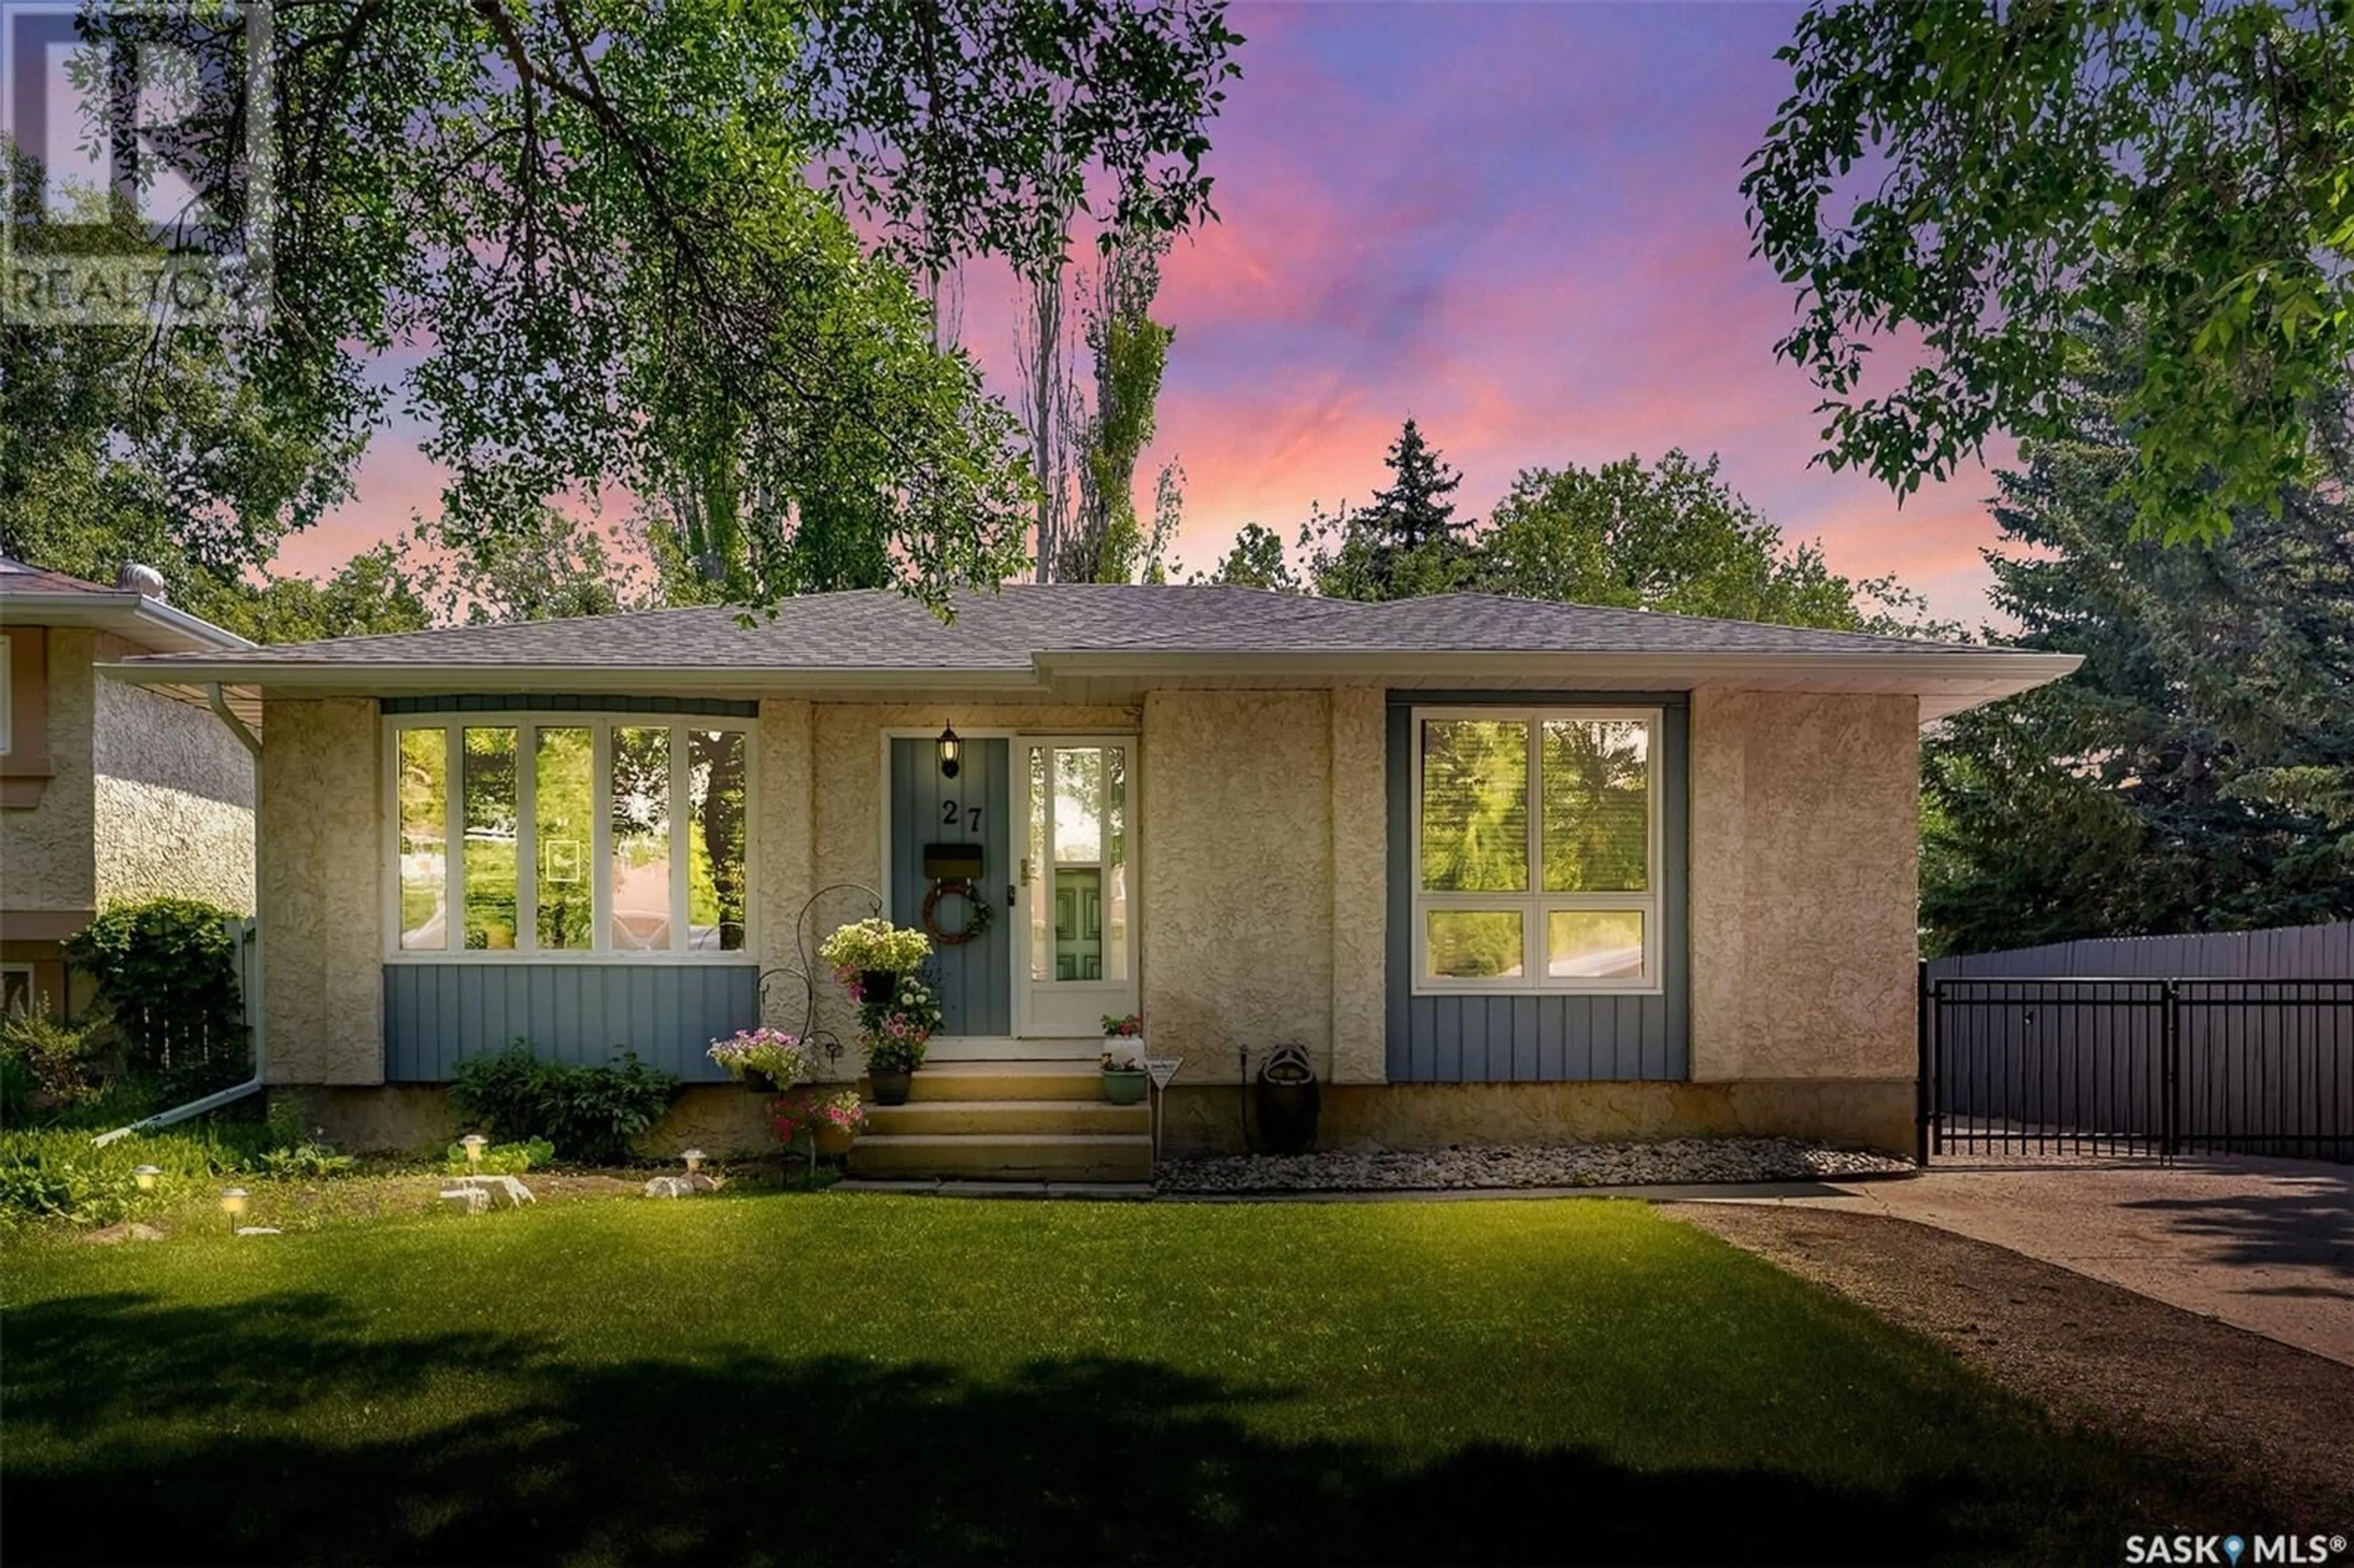 Home with vinyl exterior material for 27 Storey CRESCENT, Regina Saskatchewan S4X1L3